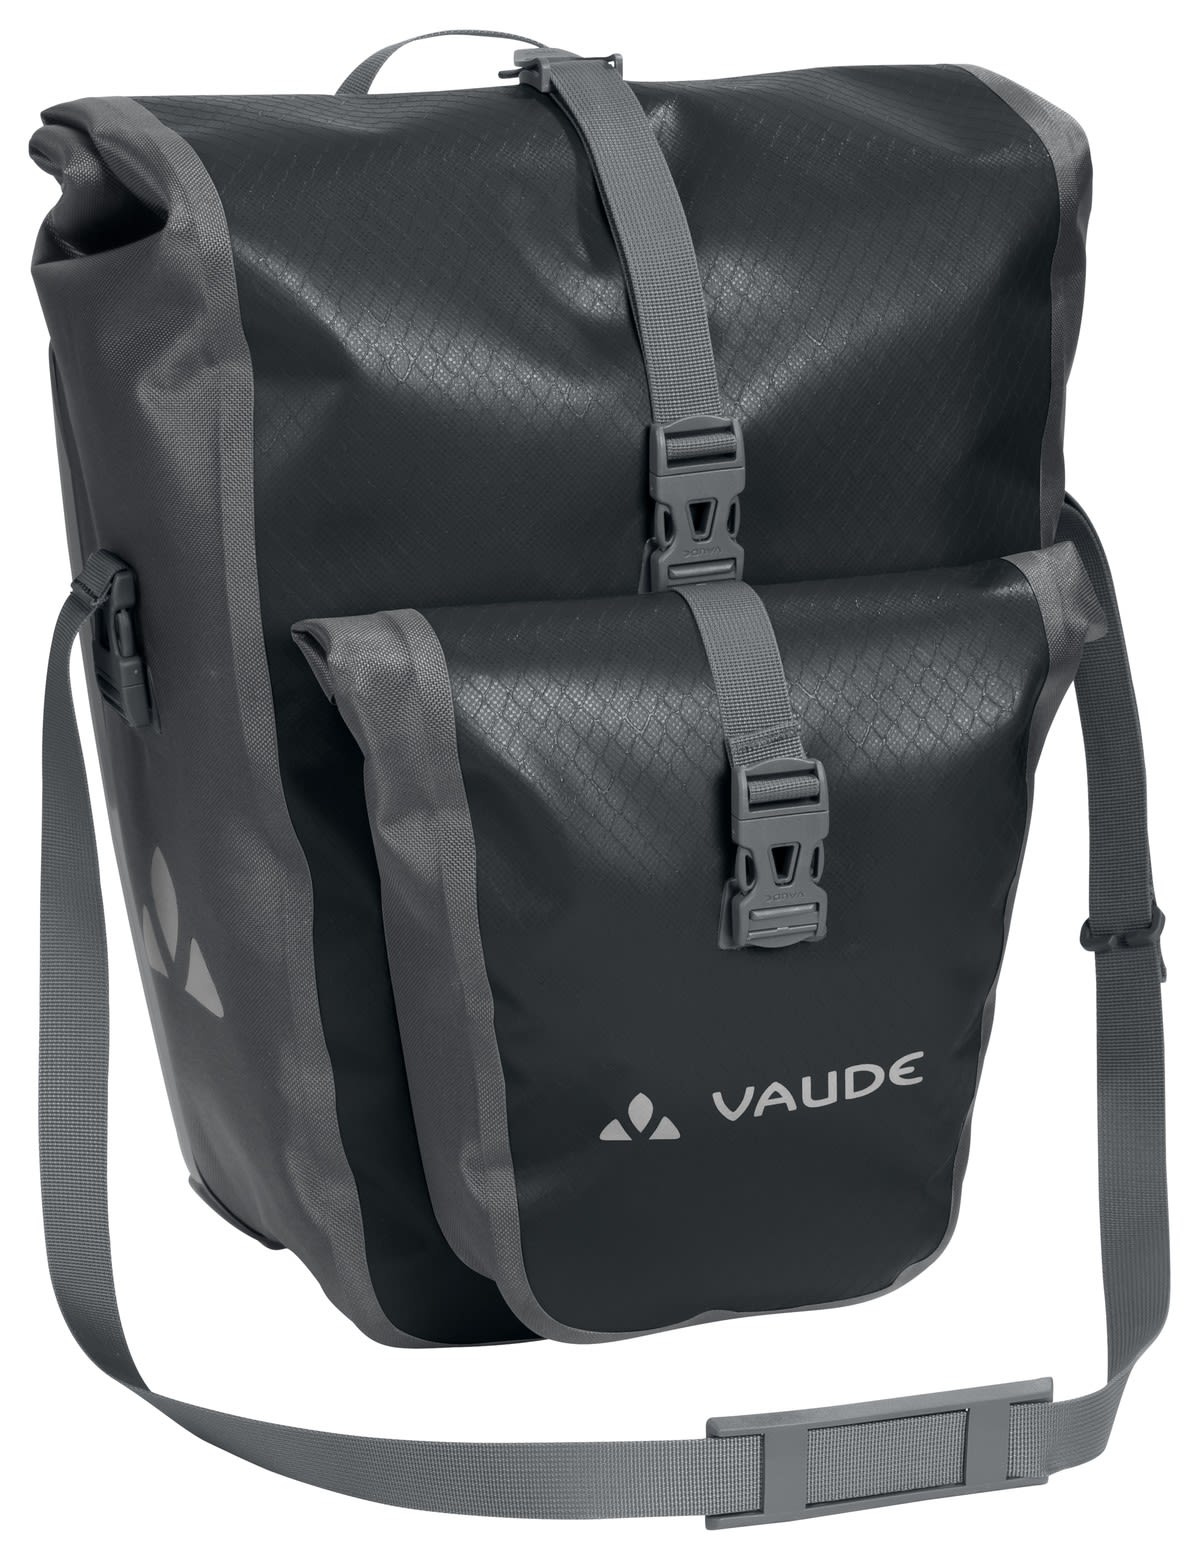 Vaude Aqua Back Plus Single Schwarz- Taschen- Grsse 25l - Farbe Black unter Vaude